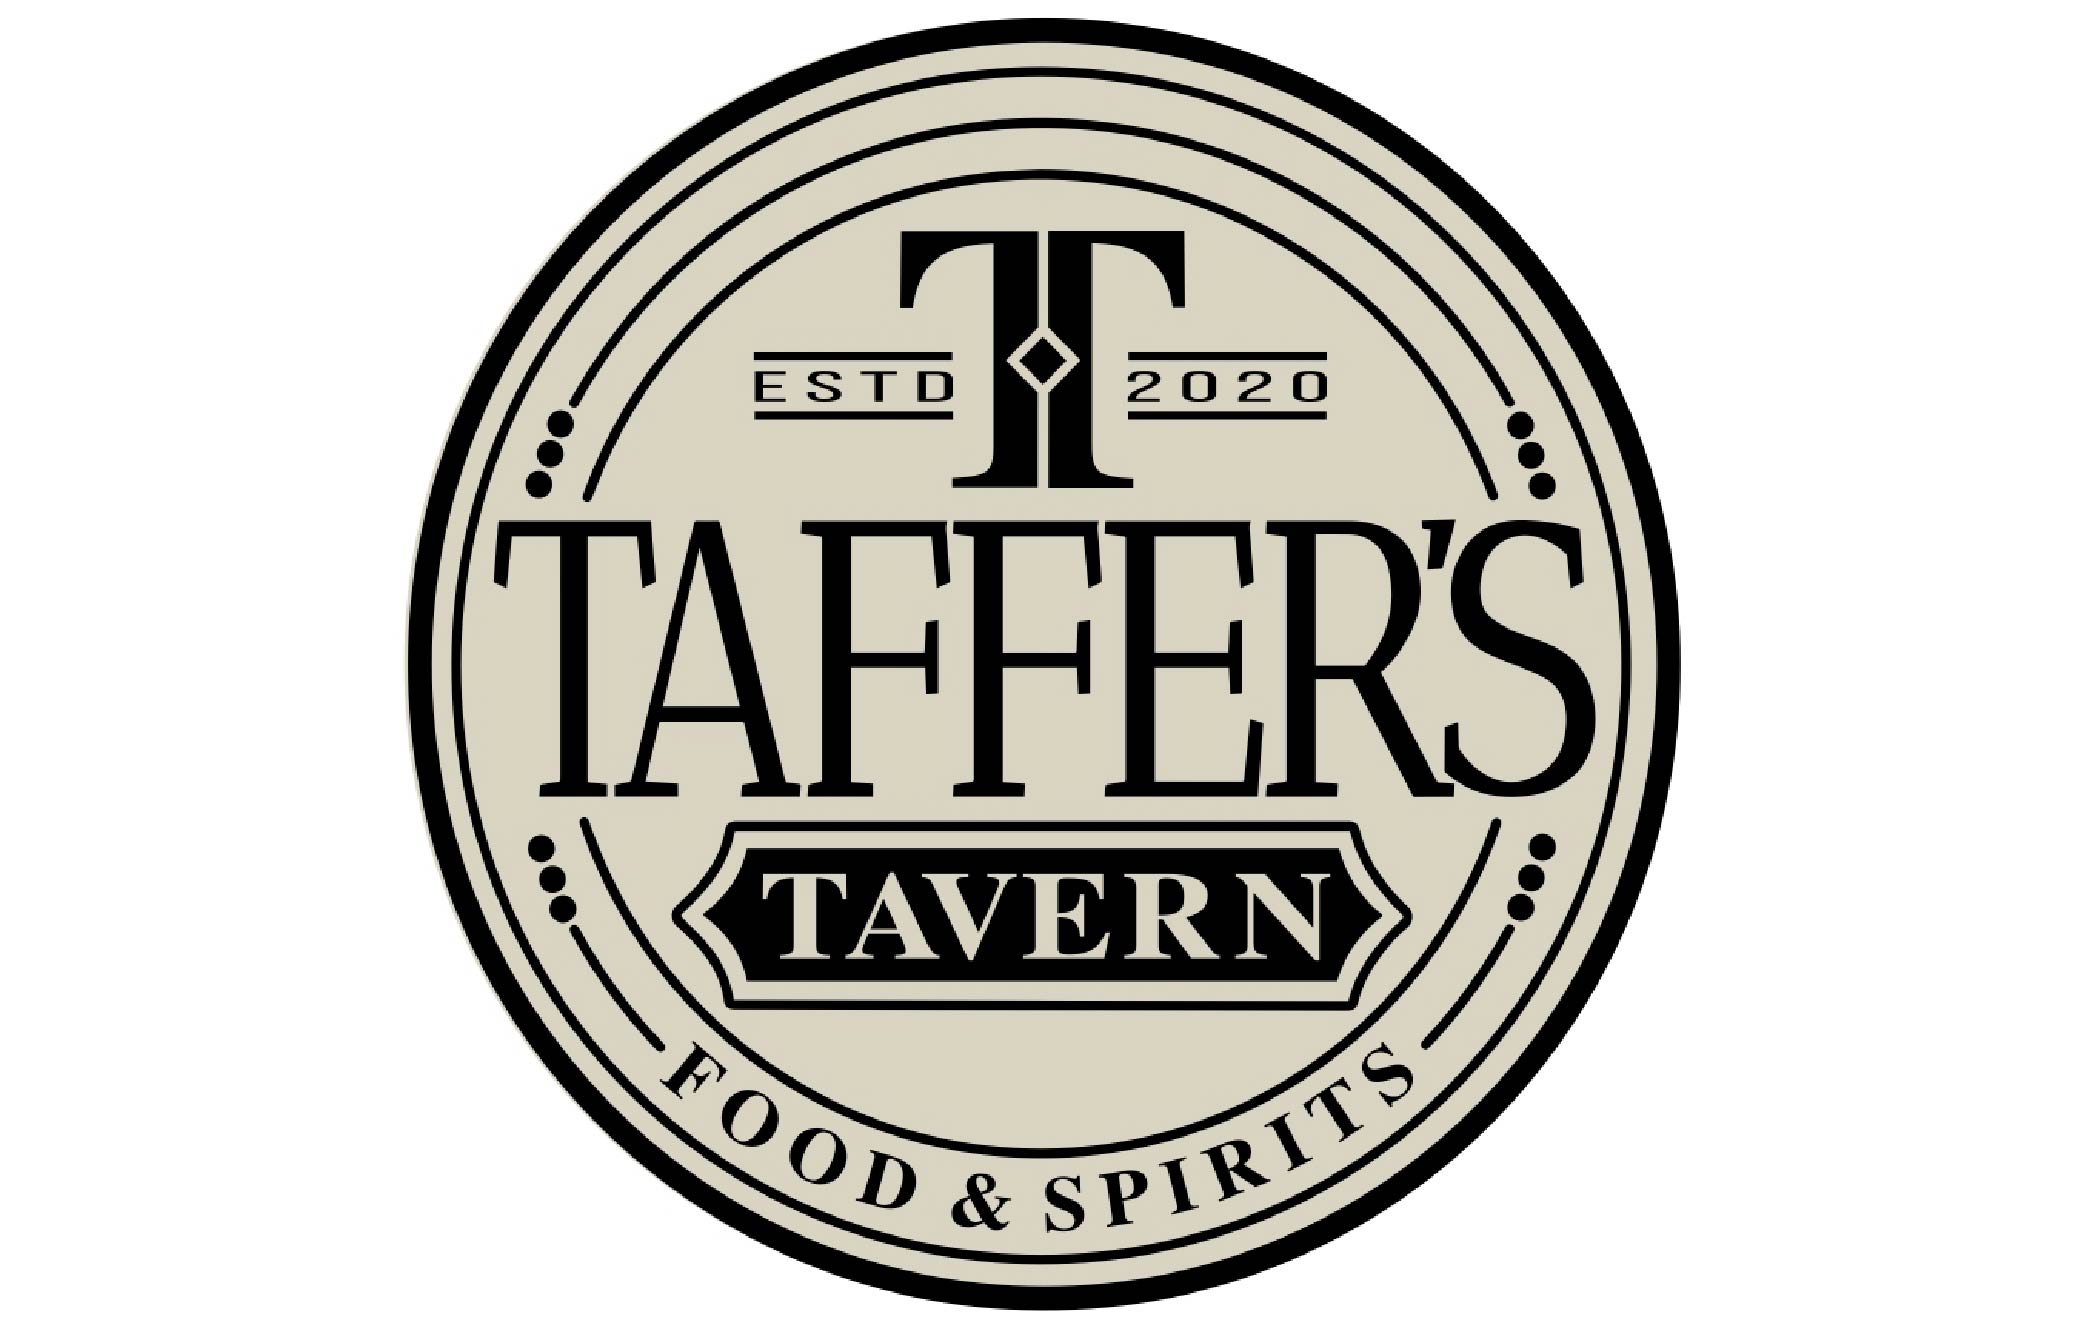 Taffers Tavern Food & Spirits Franchise